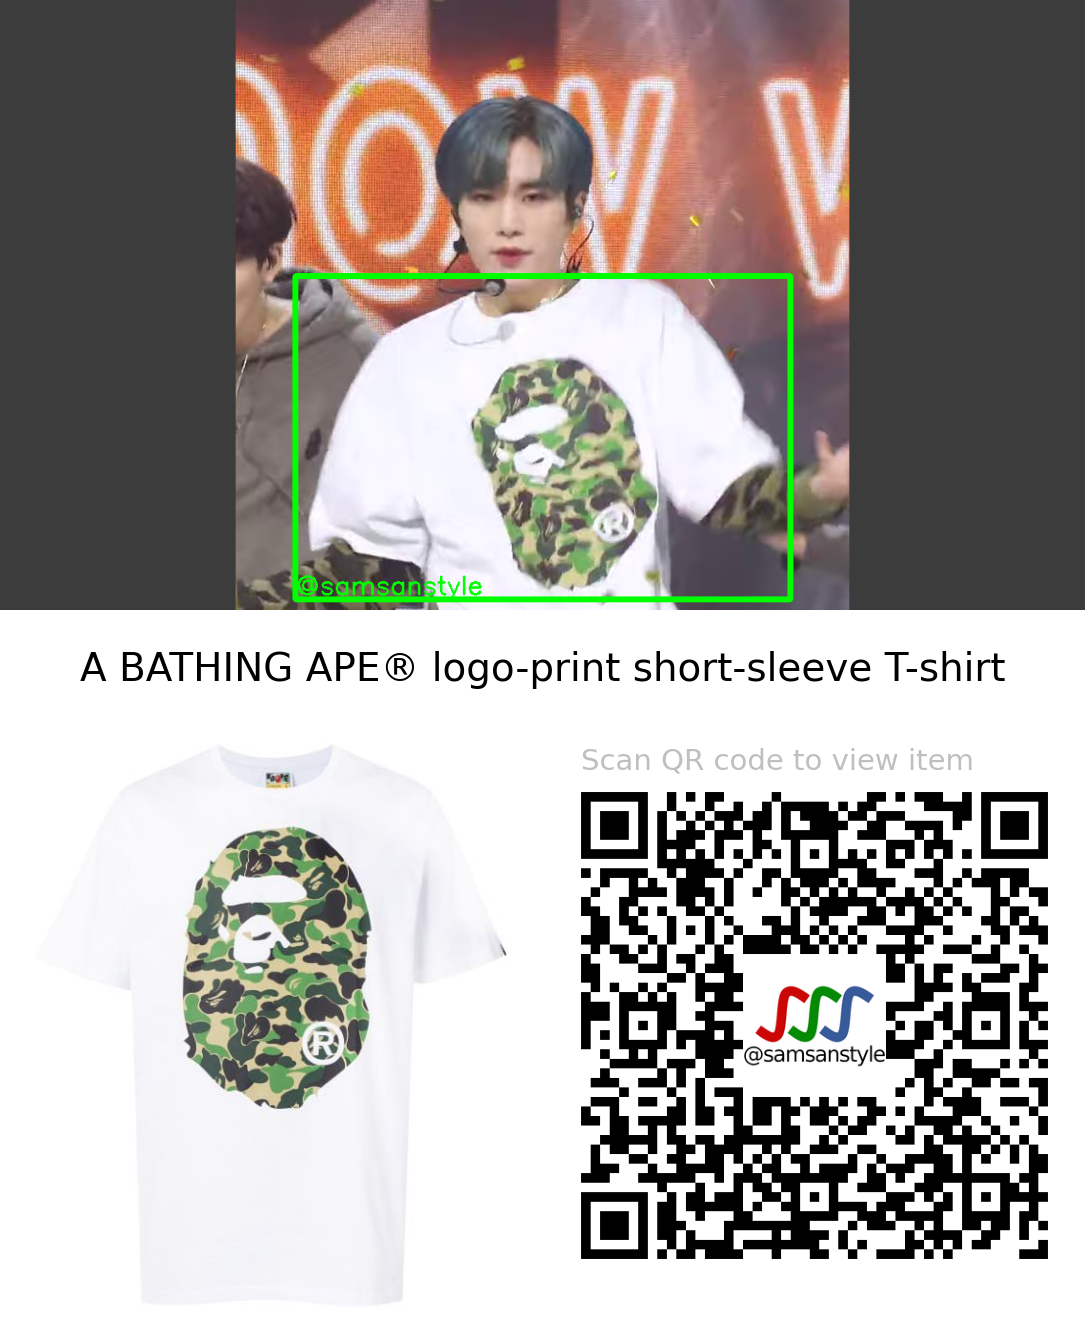 DKB Lune | Roller Coaster SBS Inkigayo | A BATHING APE logo-print short-sleeve T-shirt